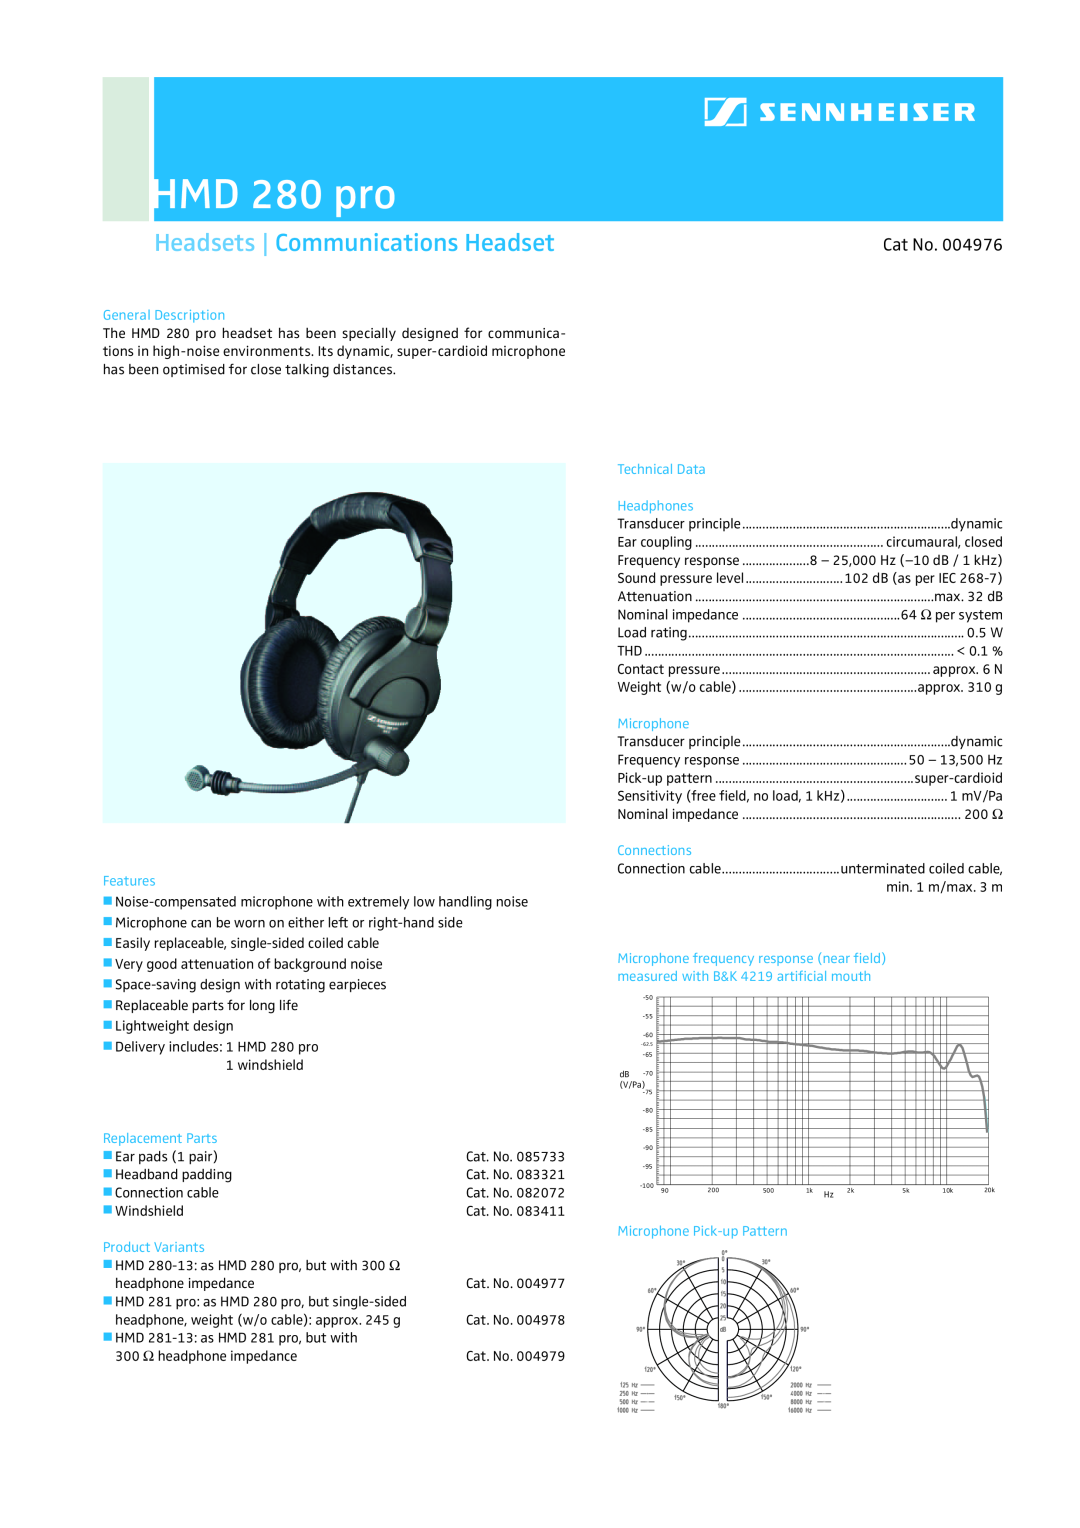 Sennheiser HMD 280 PRO manual HMD 280 pro, Headsets Communications Headset, Cat No, General Description, Features 